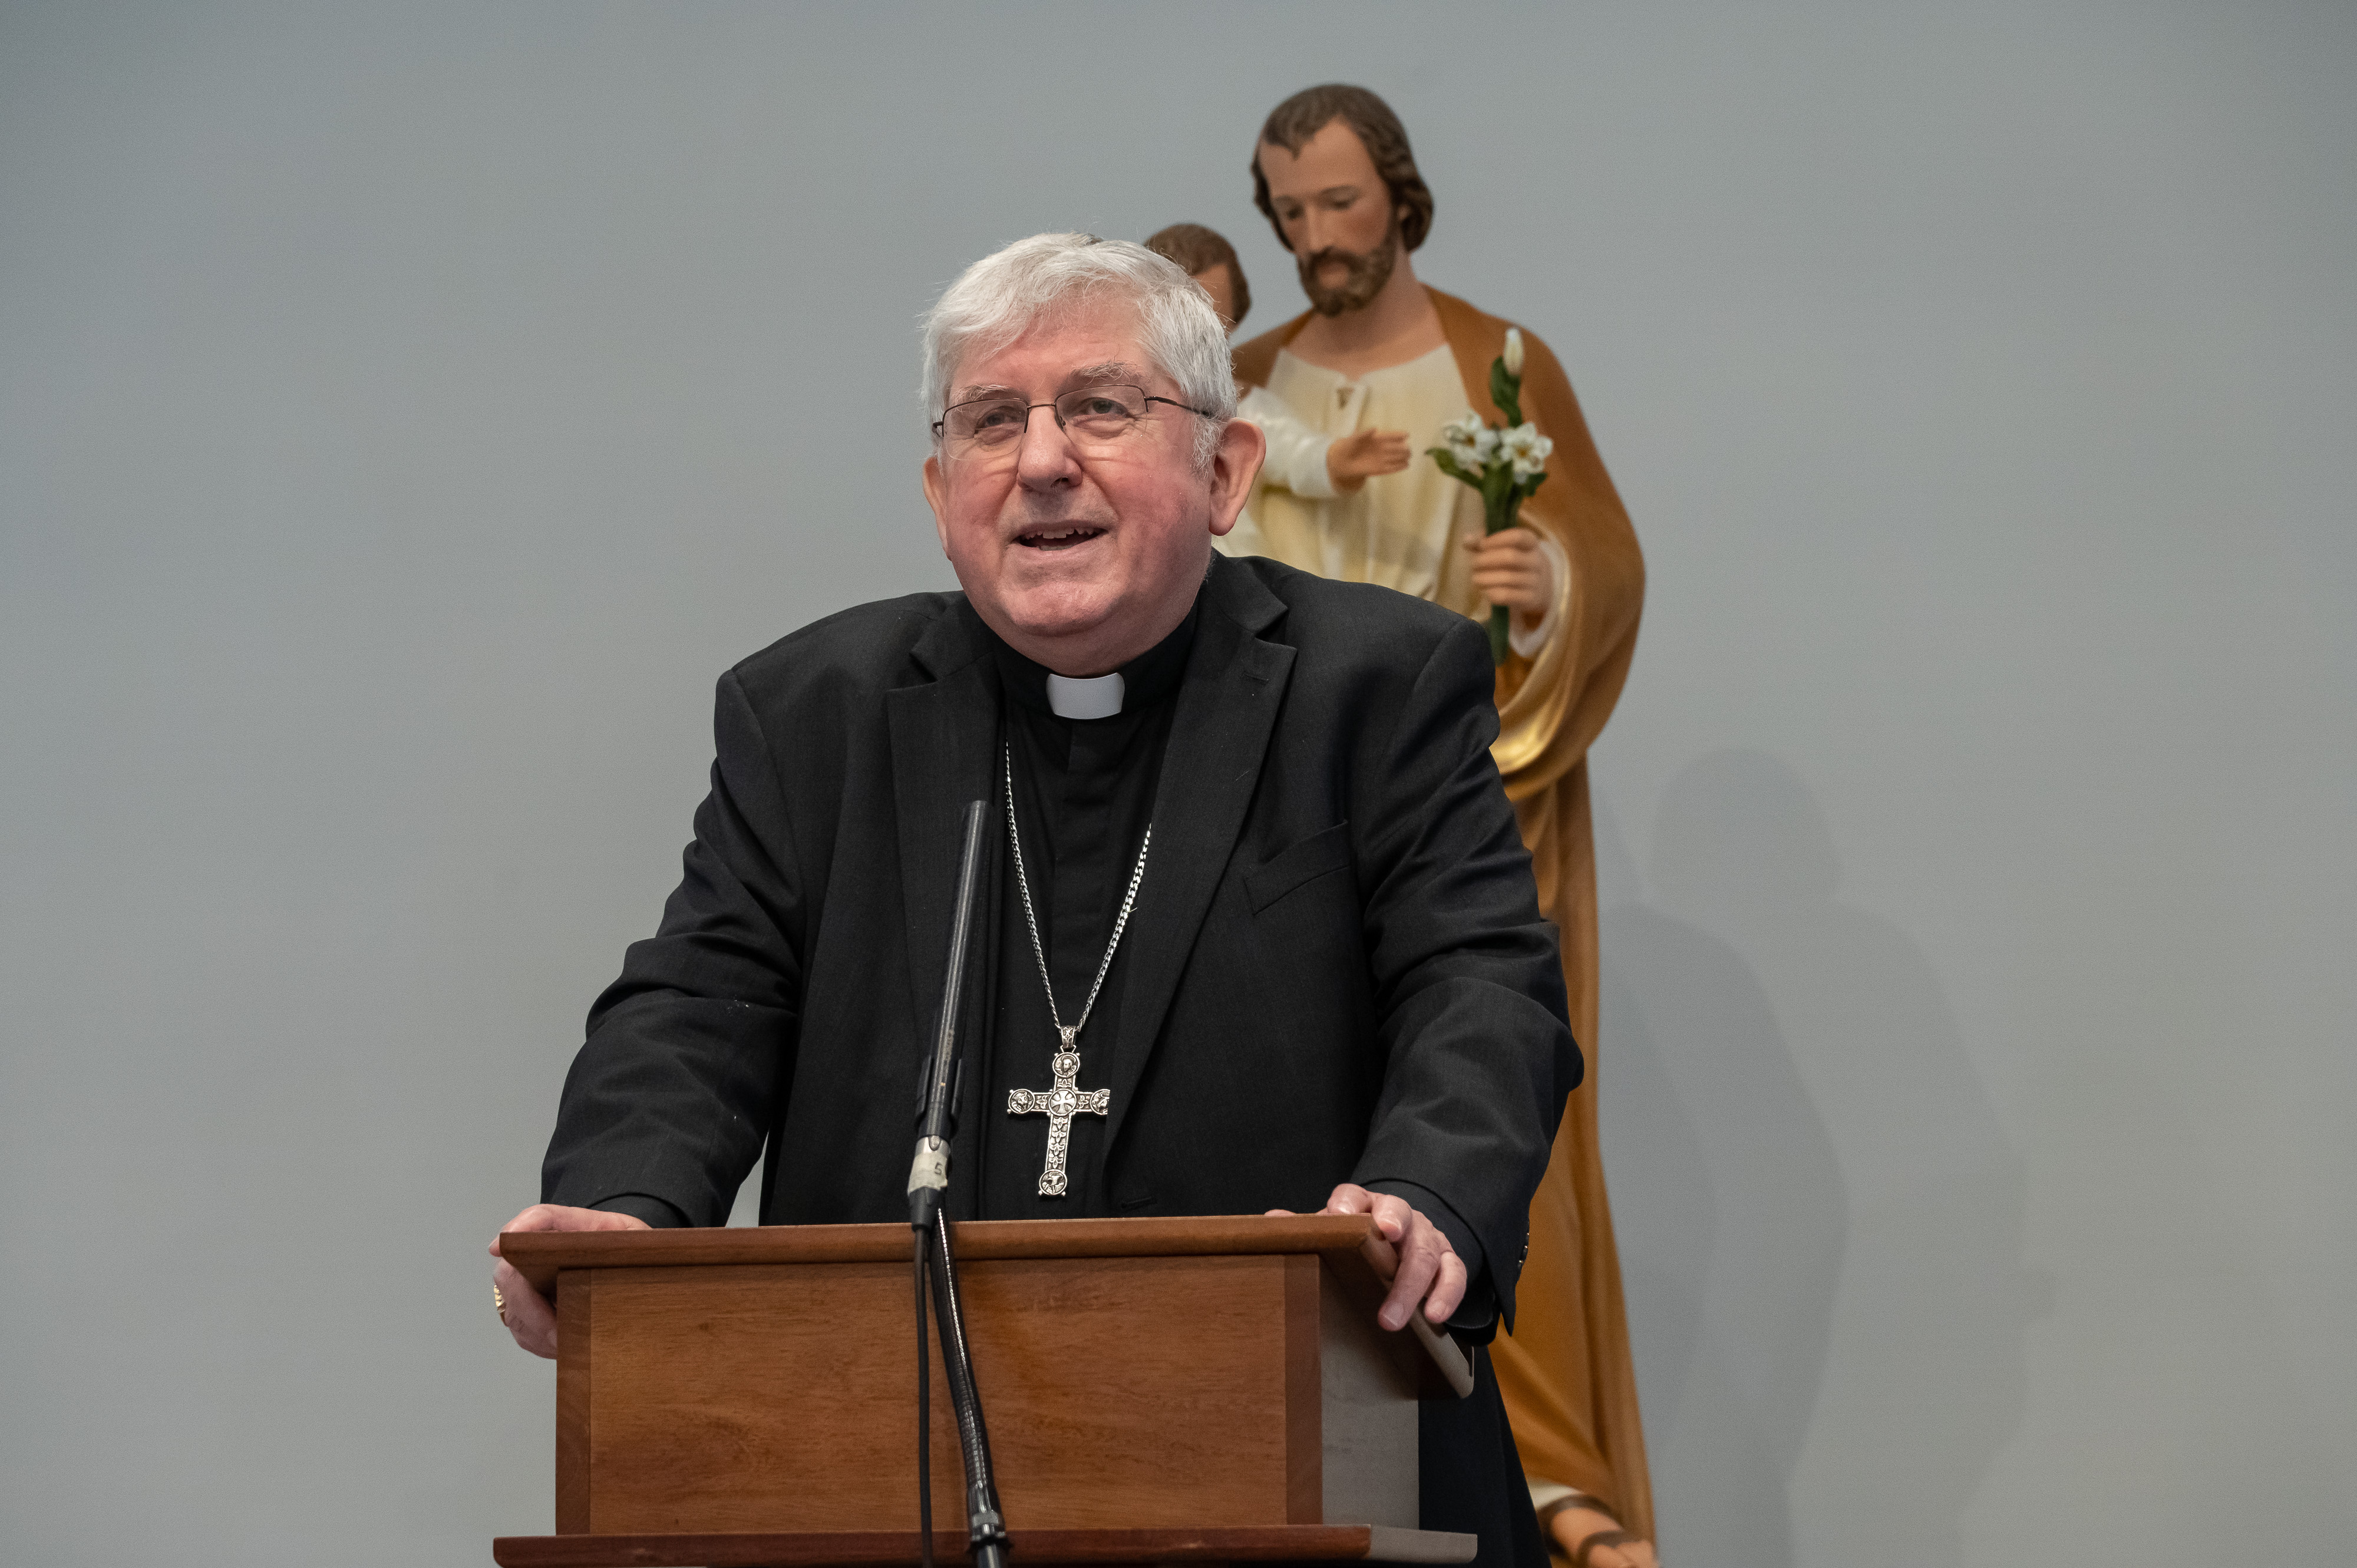 Cardinal Collins speaking at a podium